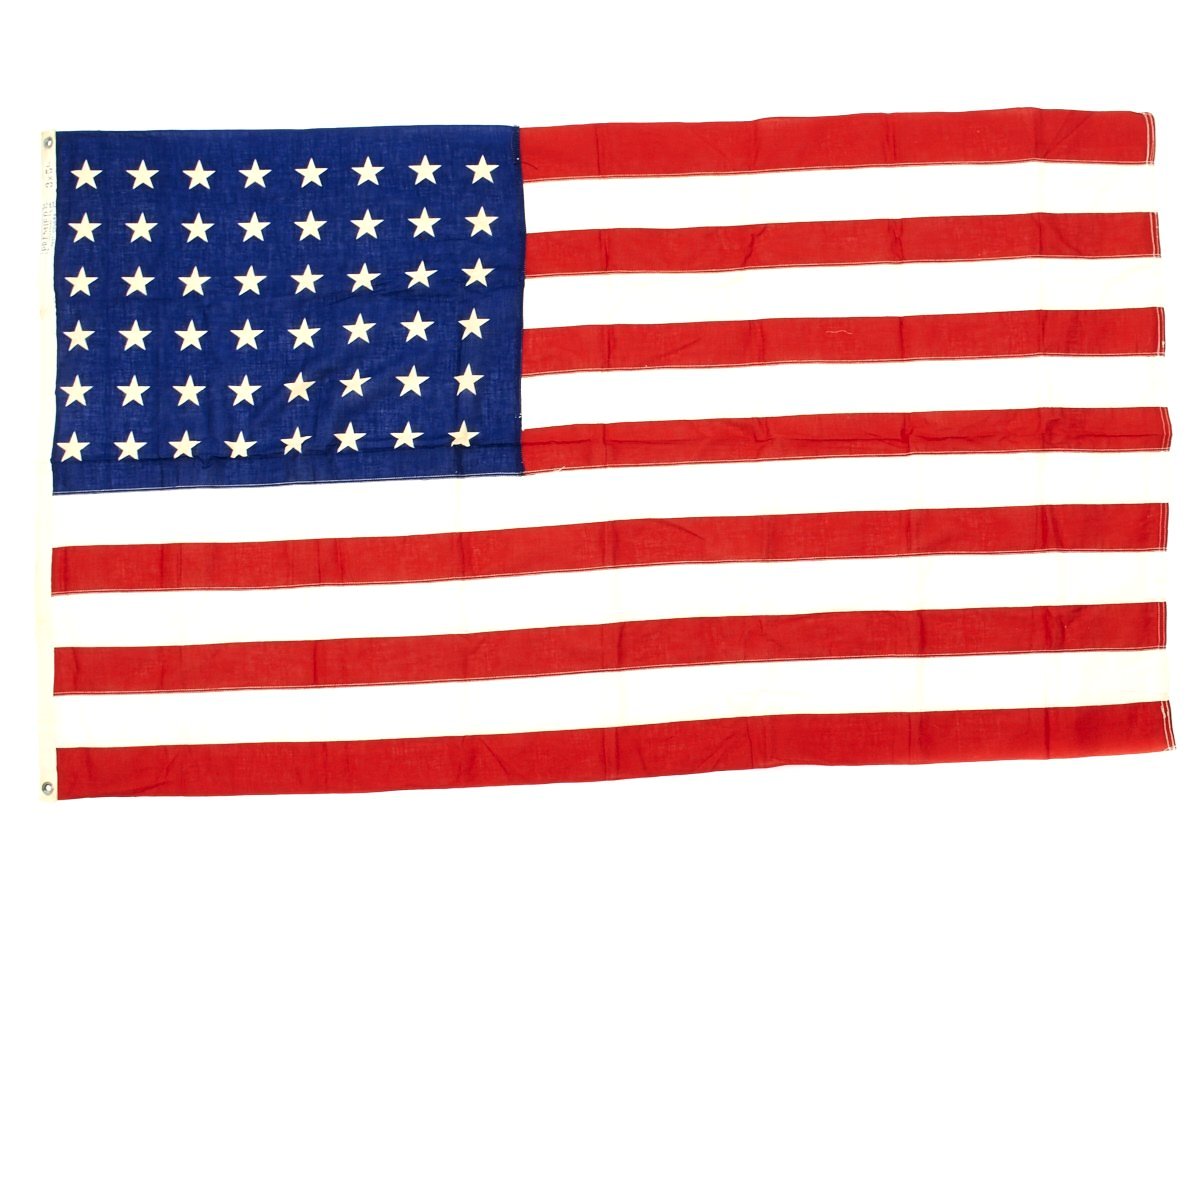 USA FLAG DRAPEAU US 48 STARS ETOILES WW2 GUERRE DDAY US ARMY UNCLE SAM